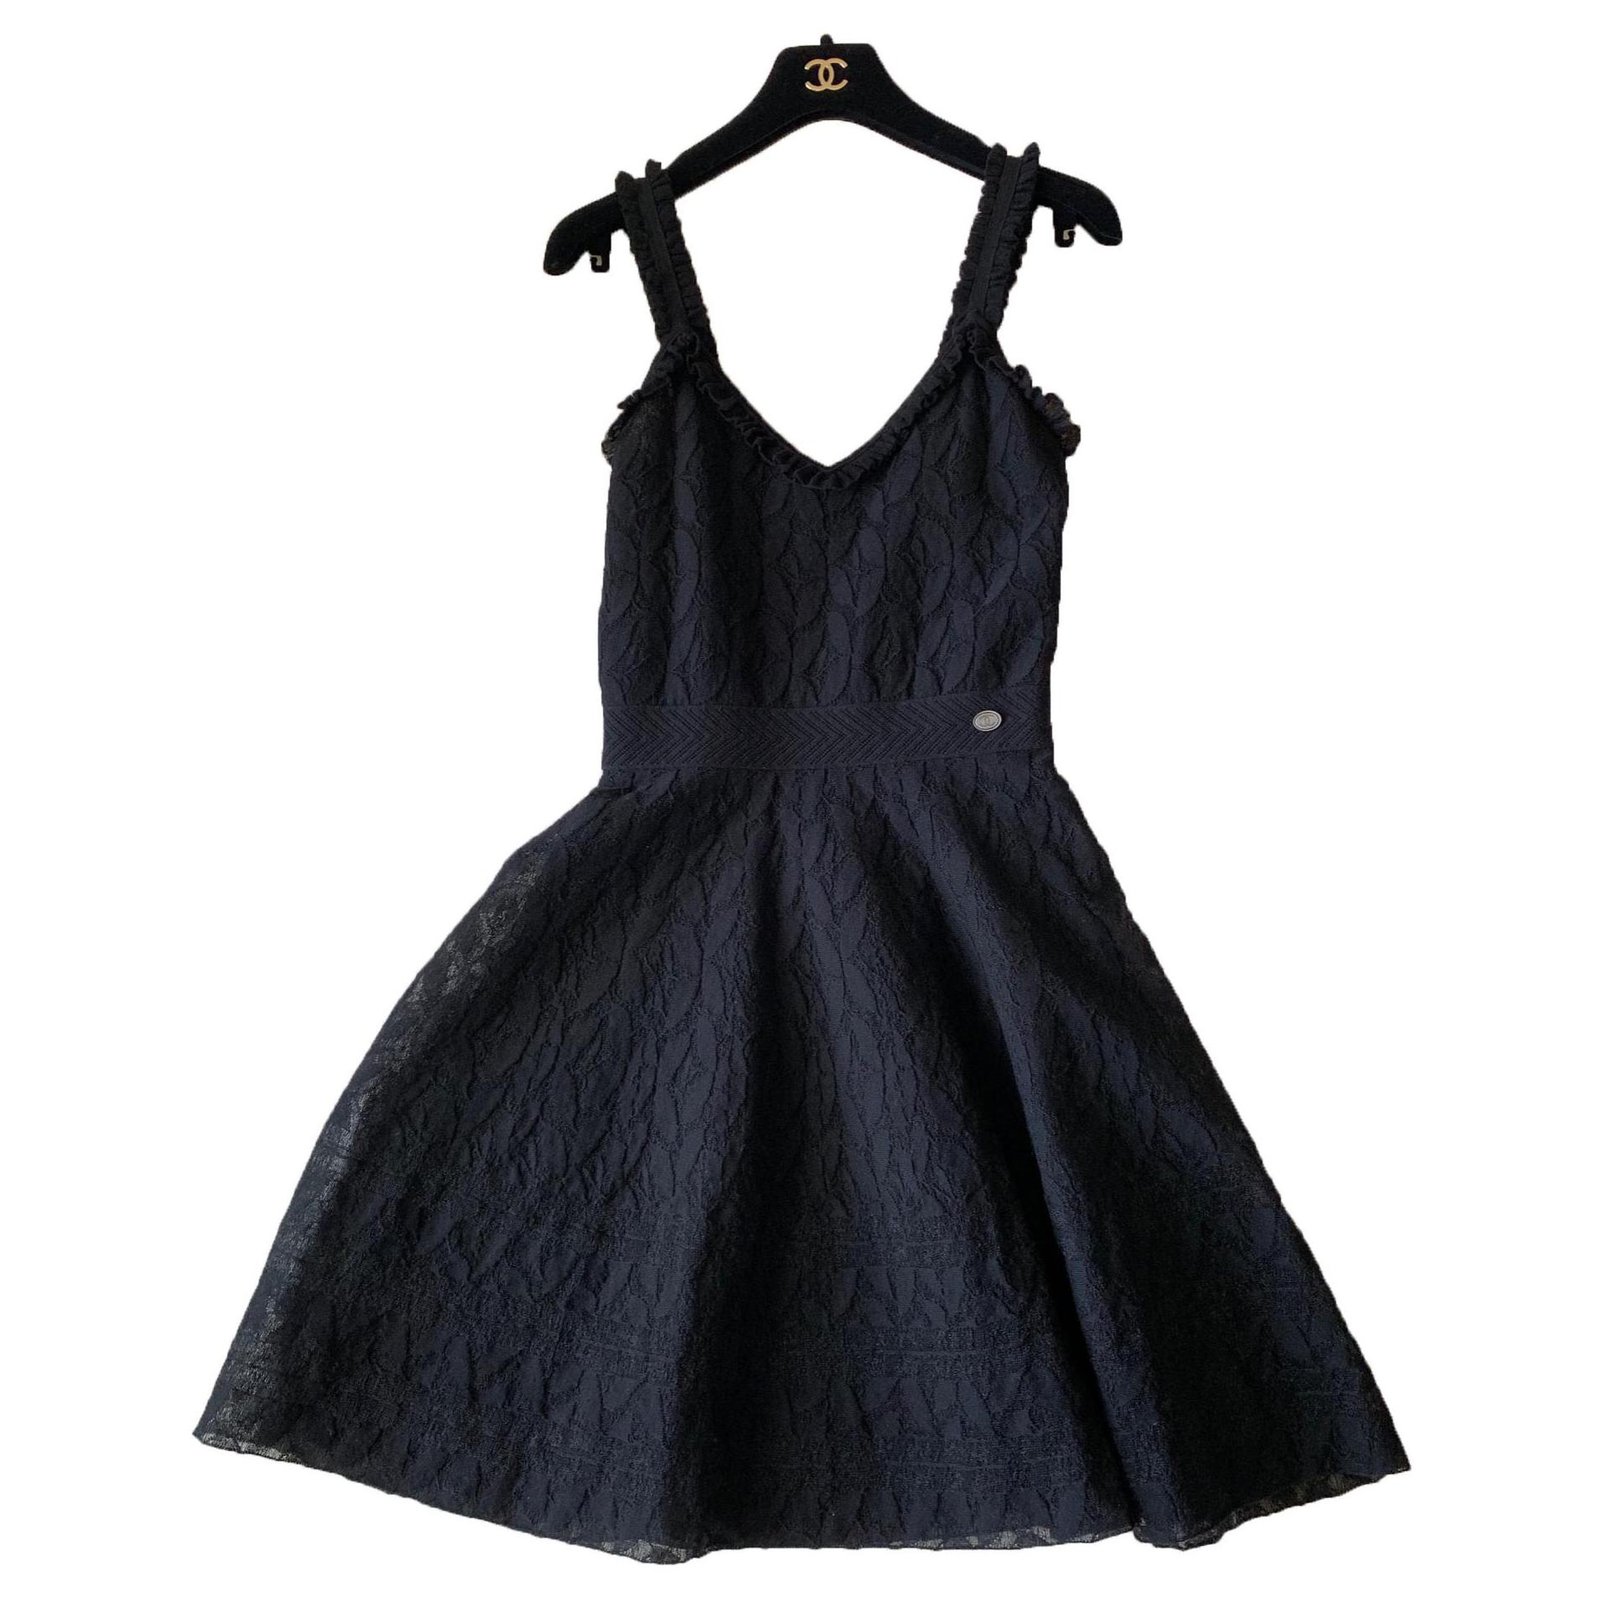 Dresses Chanel Chanel Little Black A-Line Dress Size 34 Size 34 FR